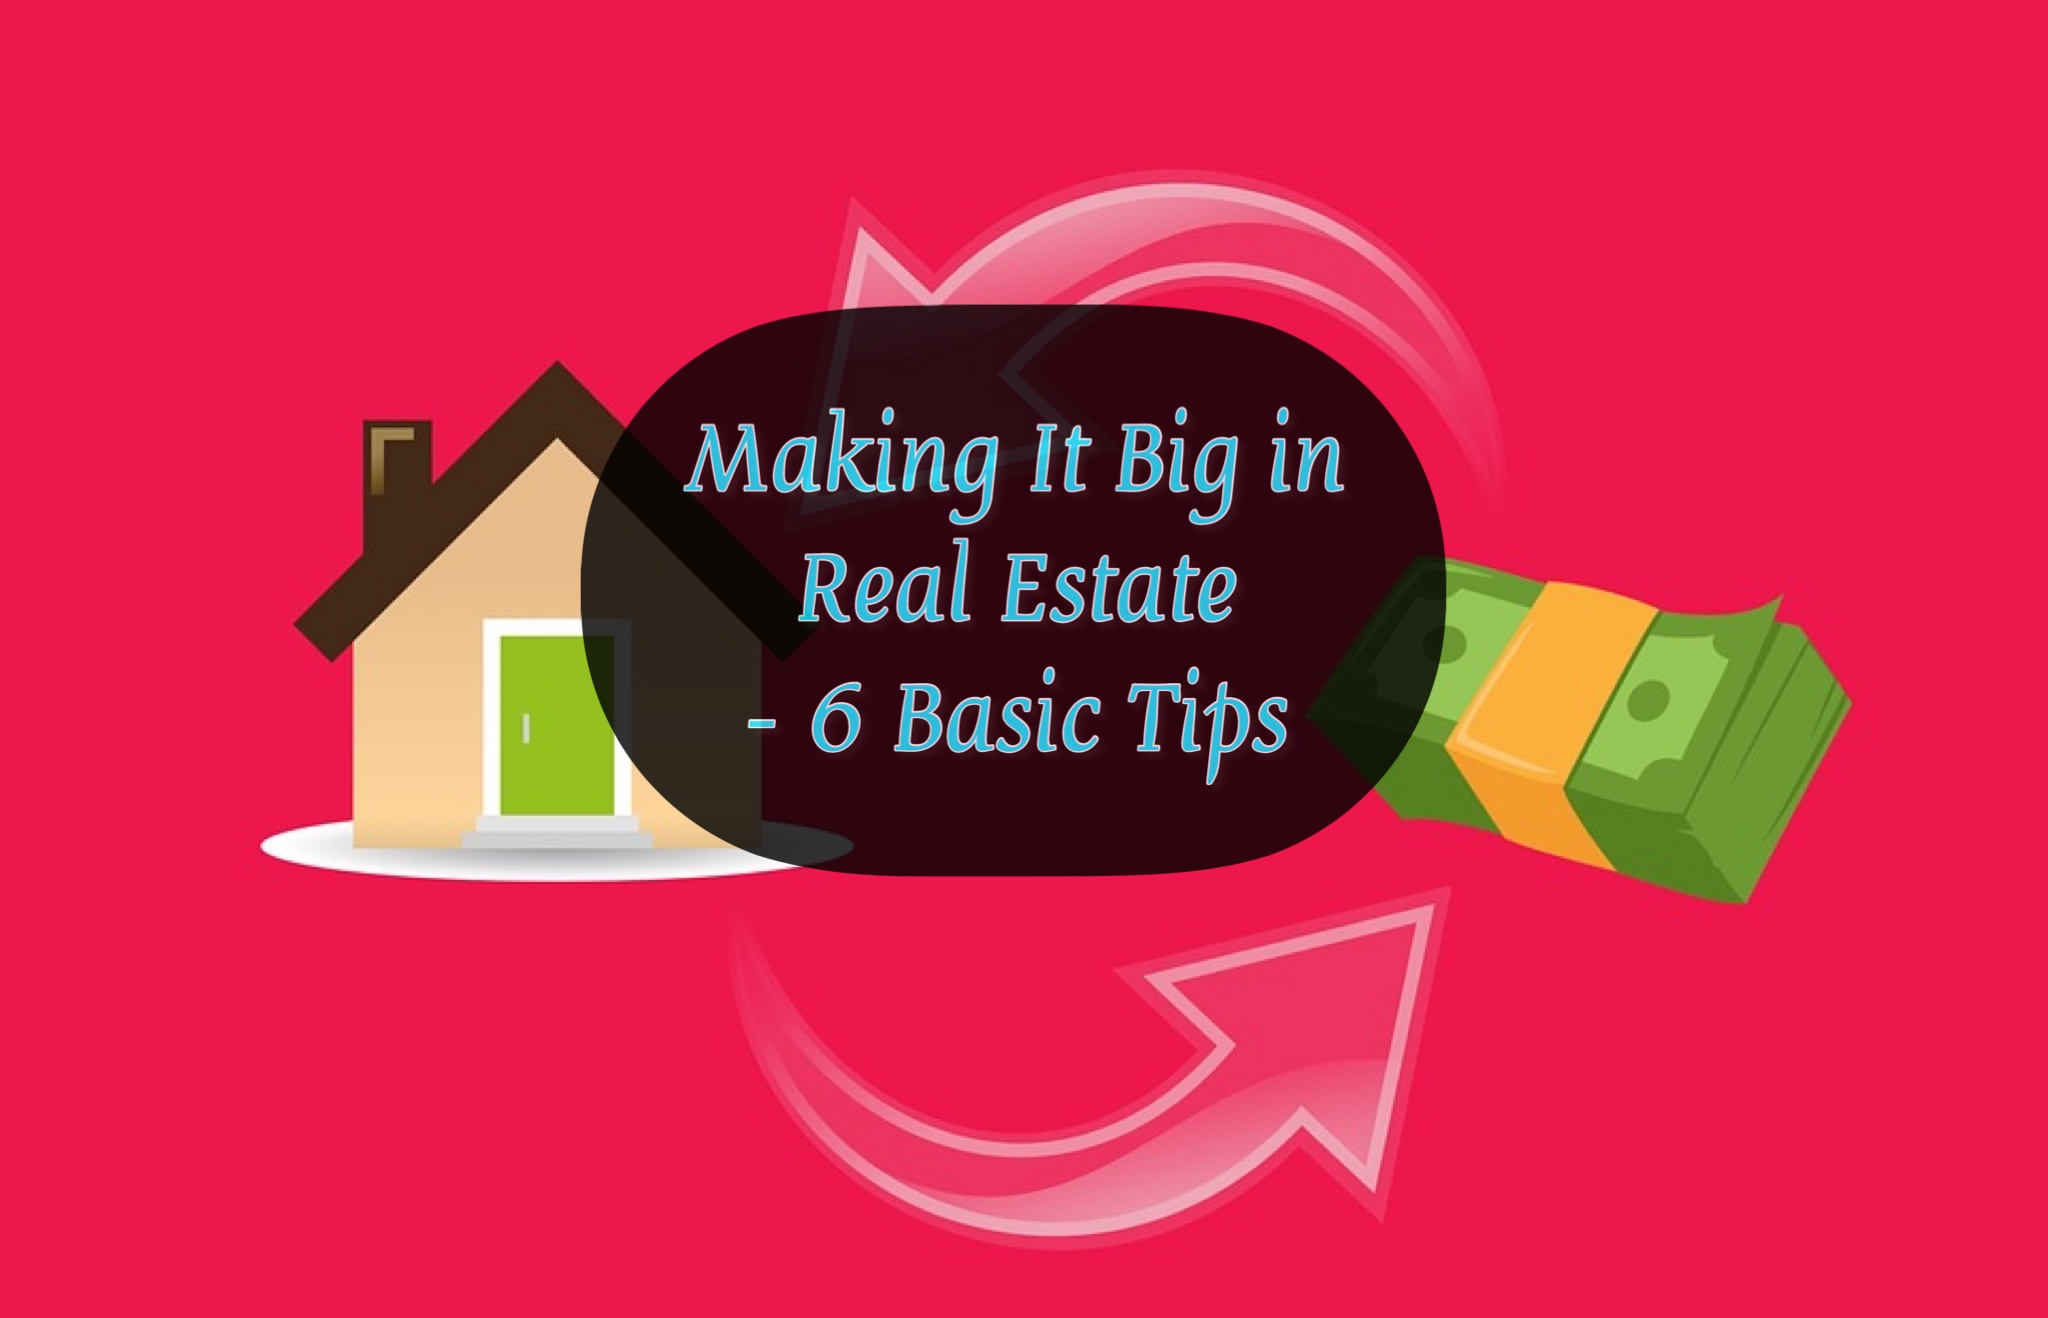 Making It Big in Real Estate - 6 Basic Tips